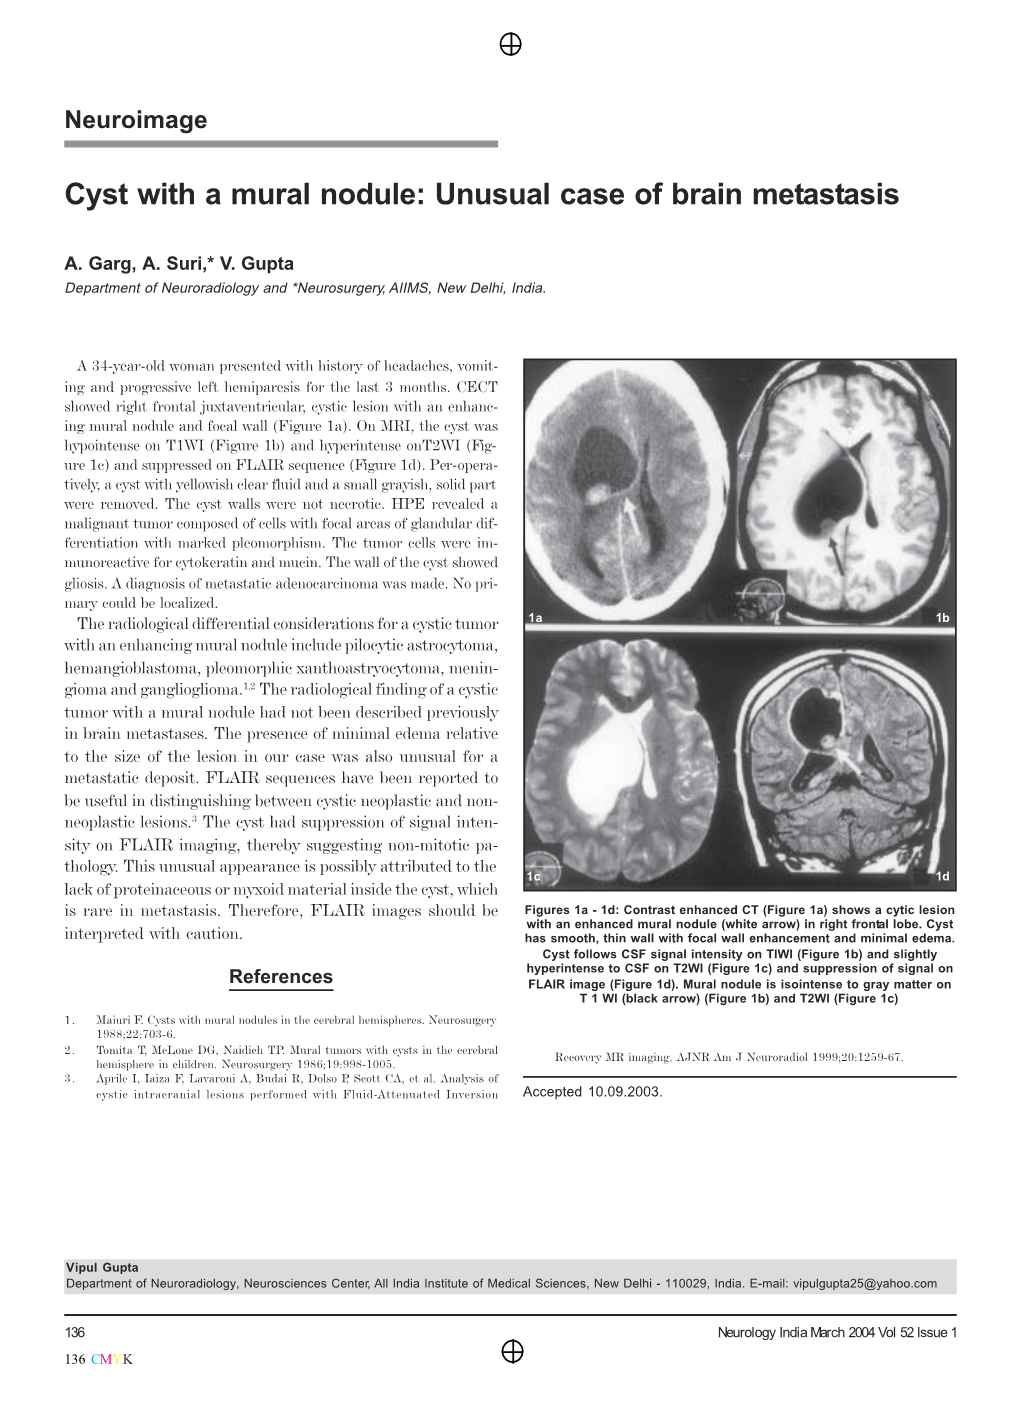 Cyst with a Mural Nodule: Unusual Case of Brain Metastasis